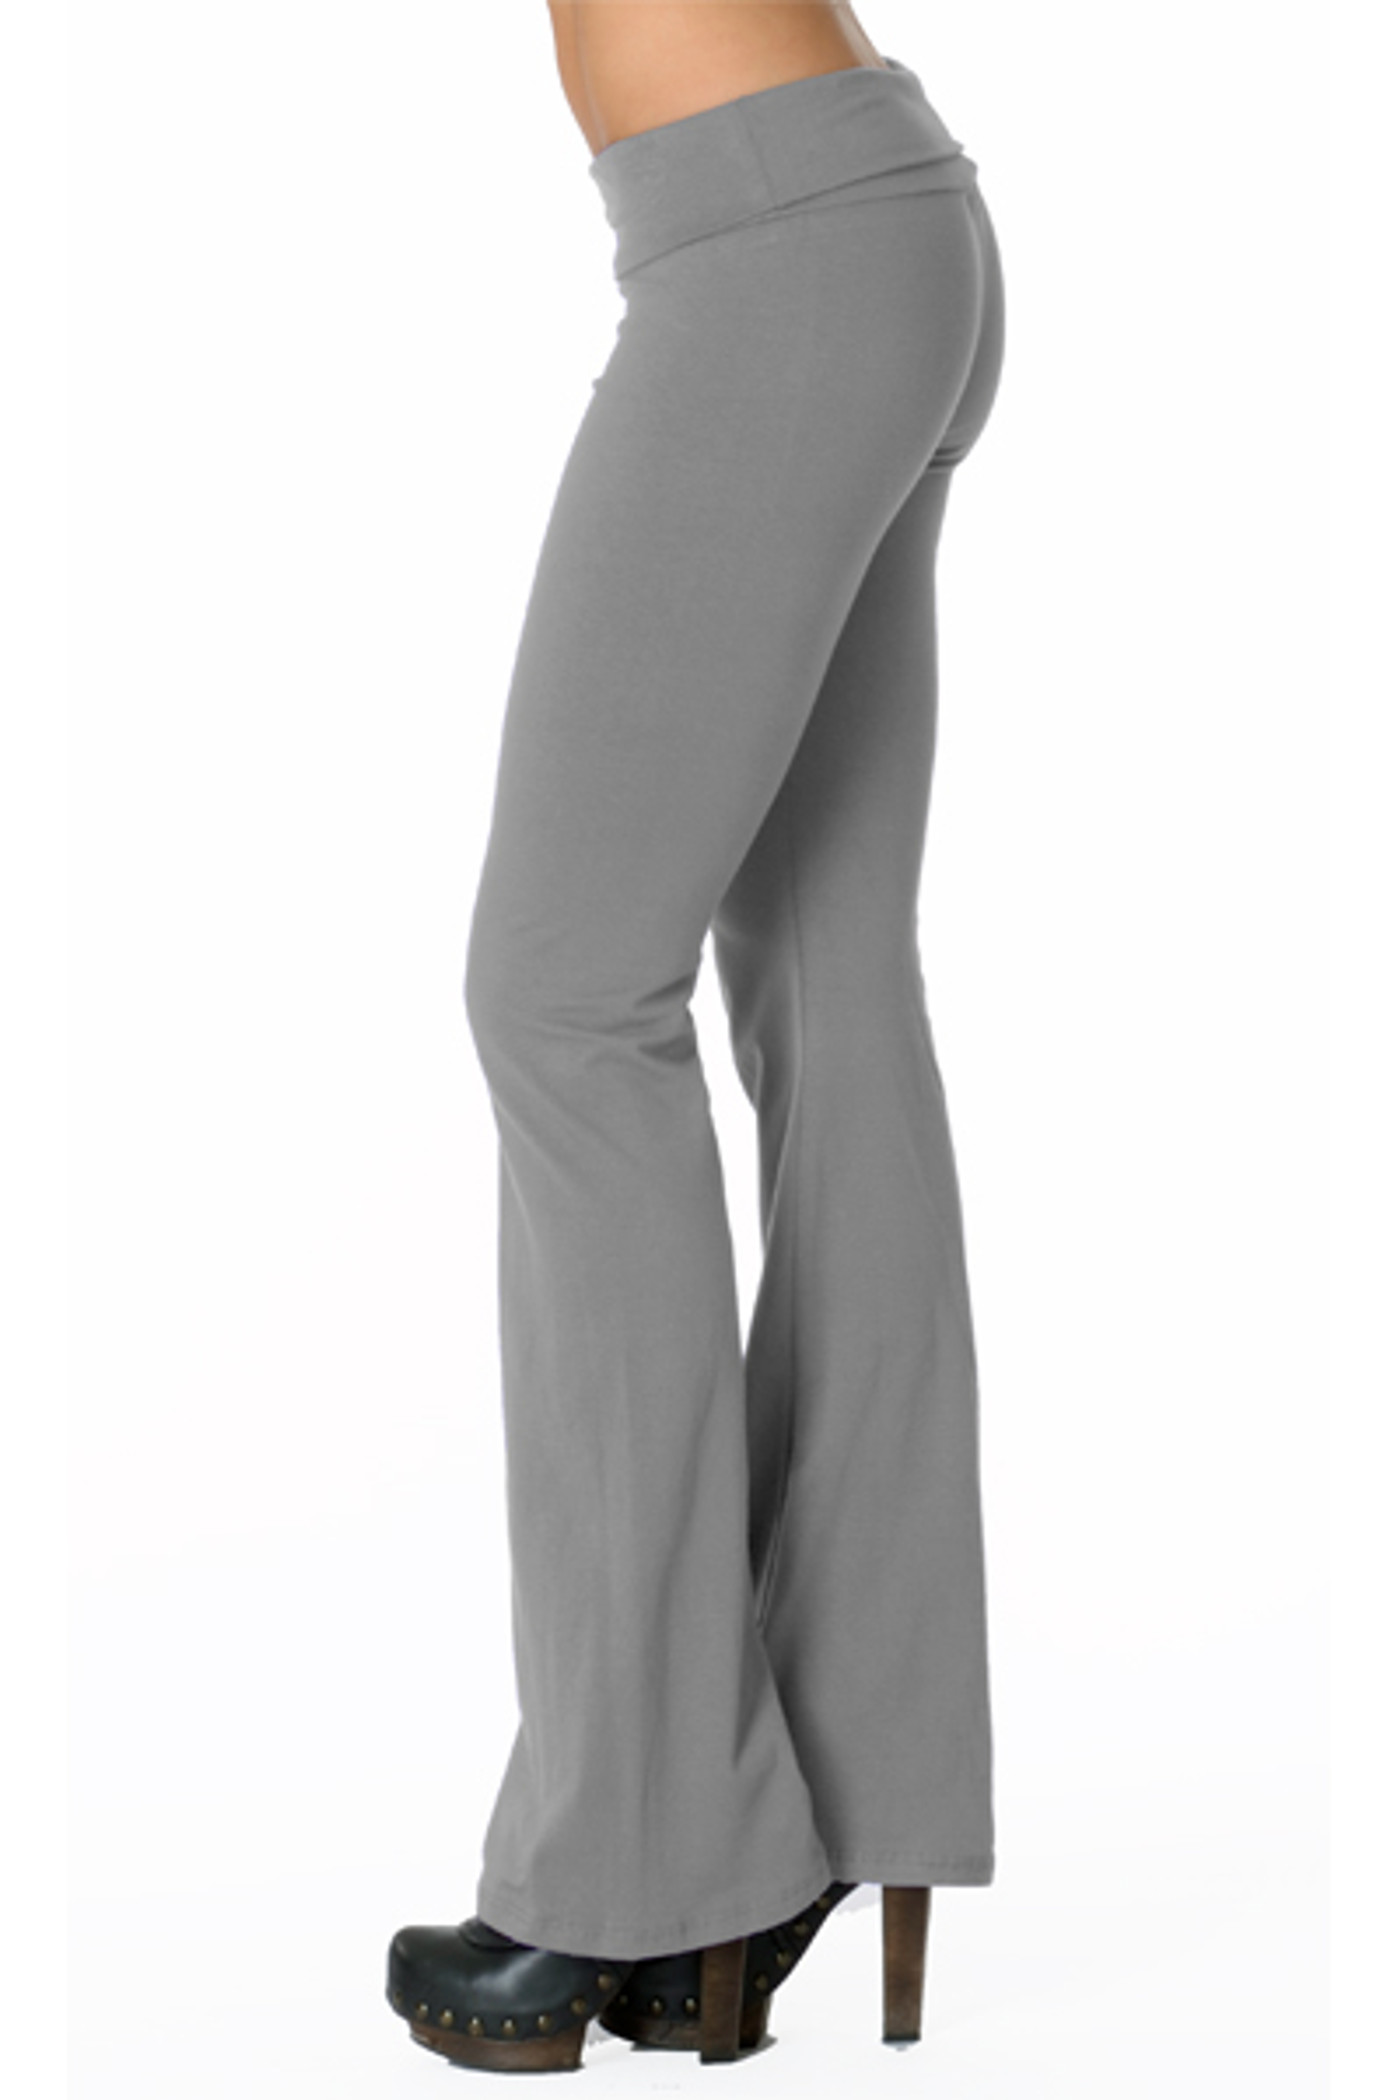 Viosi Yoga Pants for Women Straight Leg Fold Over High Waisted Cotton  Spandex